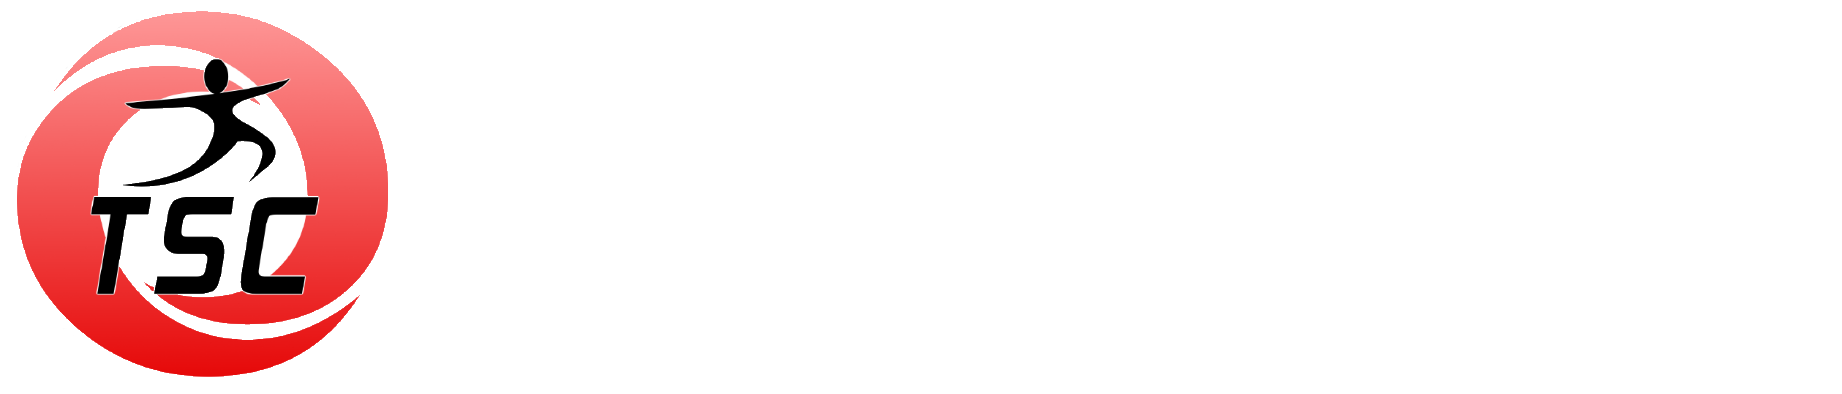 Turn- und Sportclub Strausberg logo